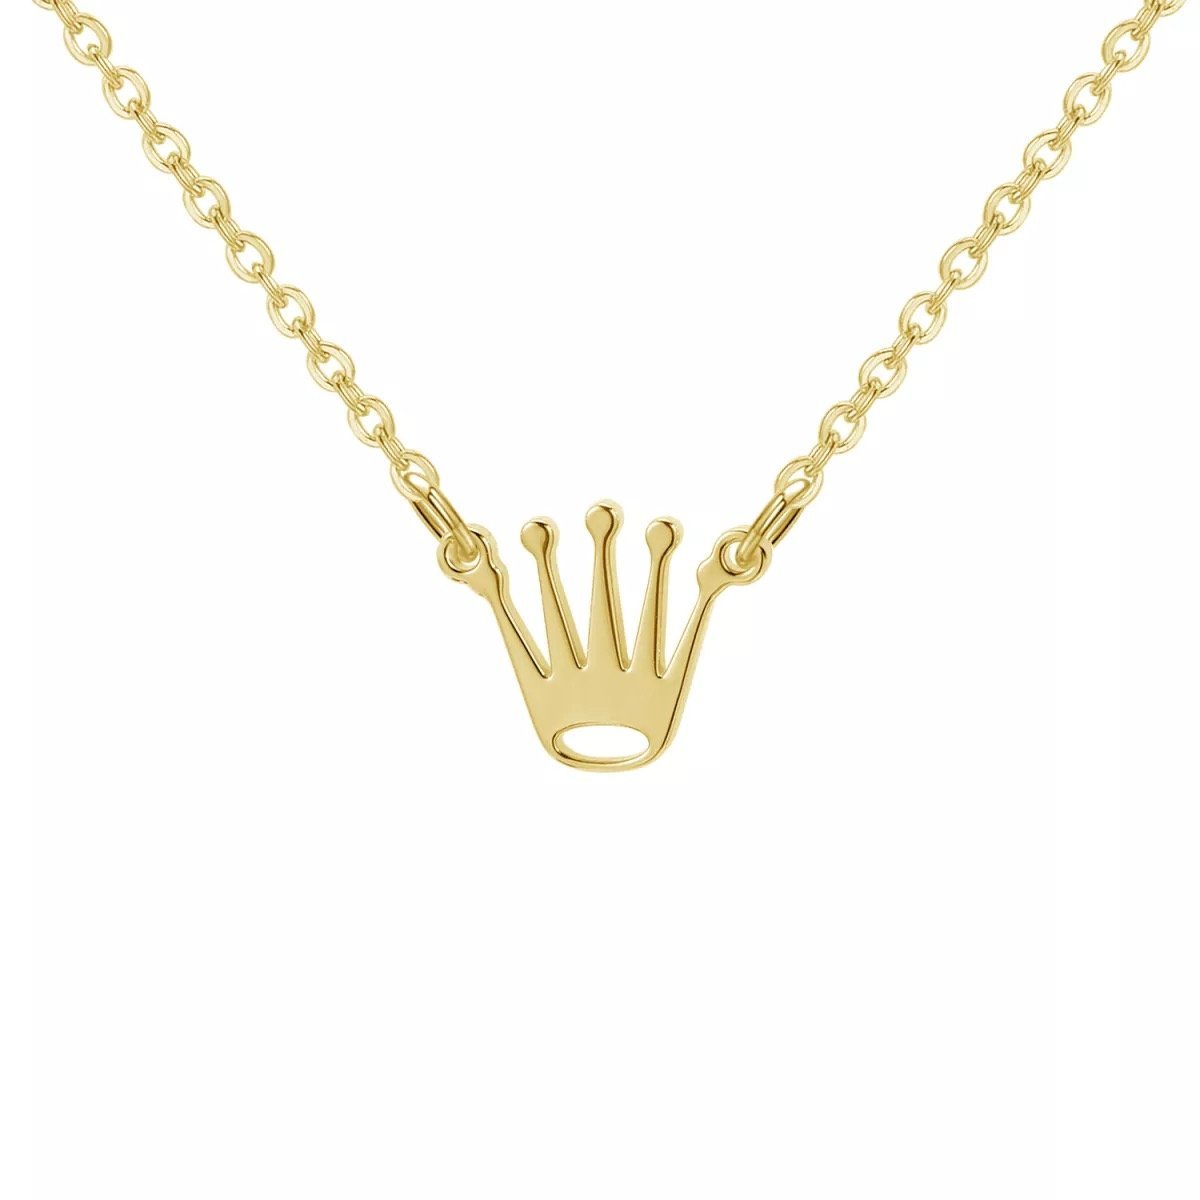 Hrh Crown Necklace - HouseofLx18K Yellow Gold